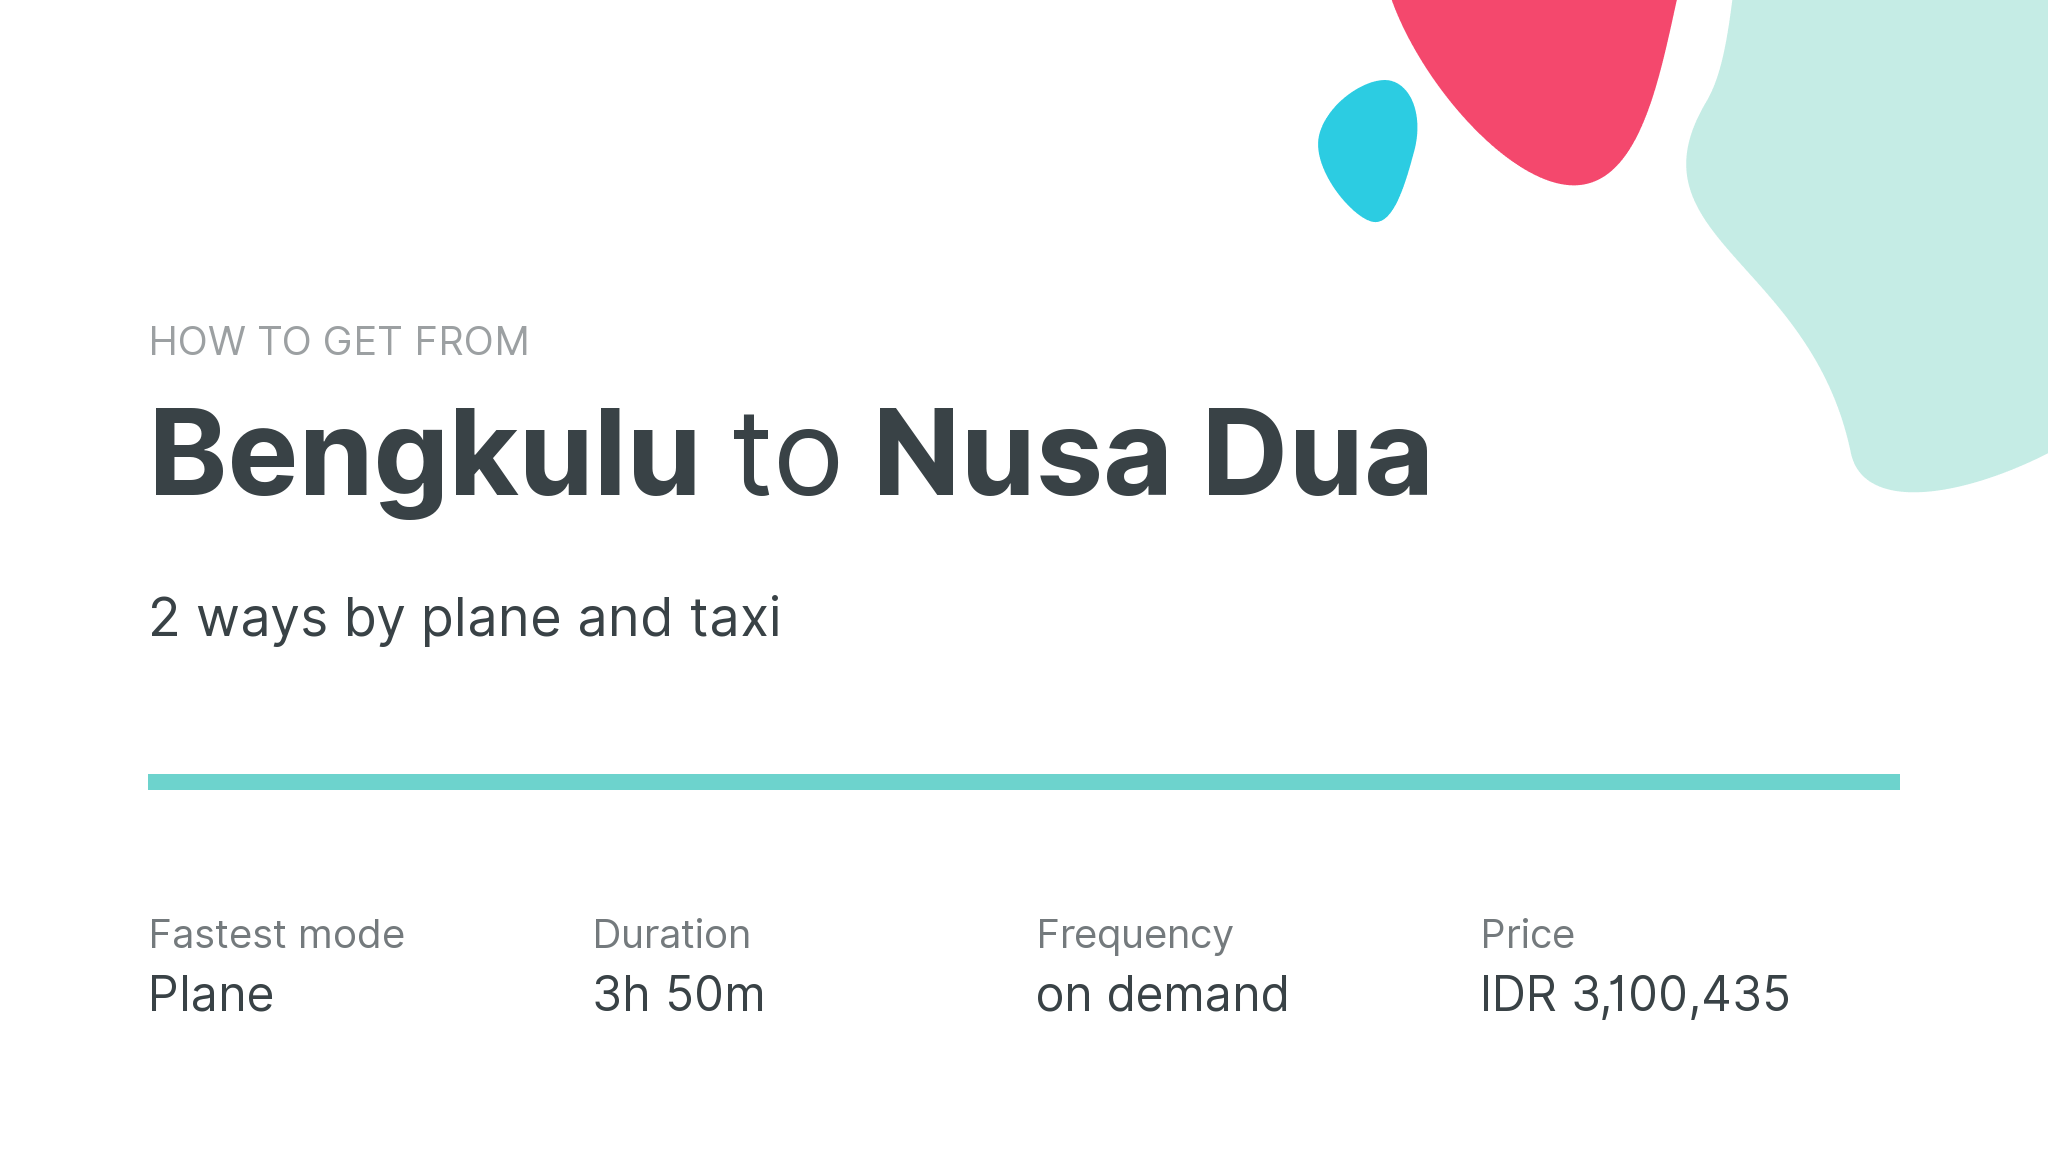 How do I get from Bengkulu to Nusa Dua